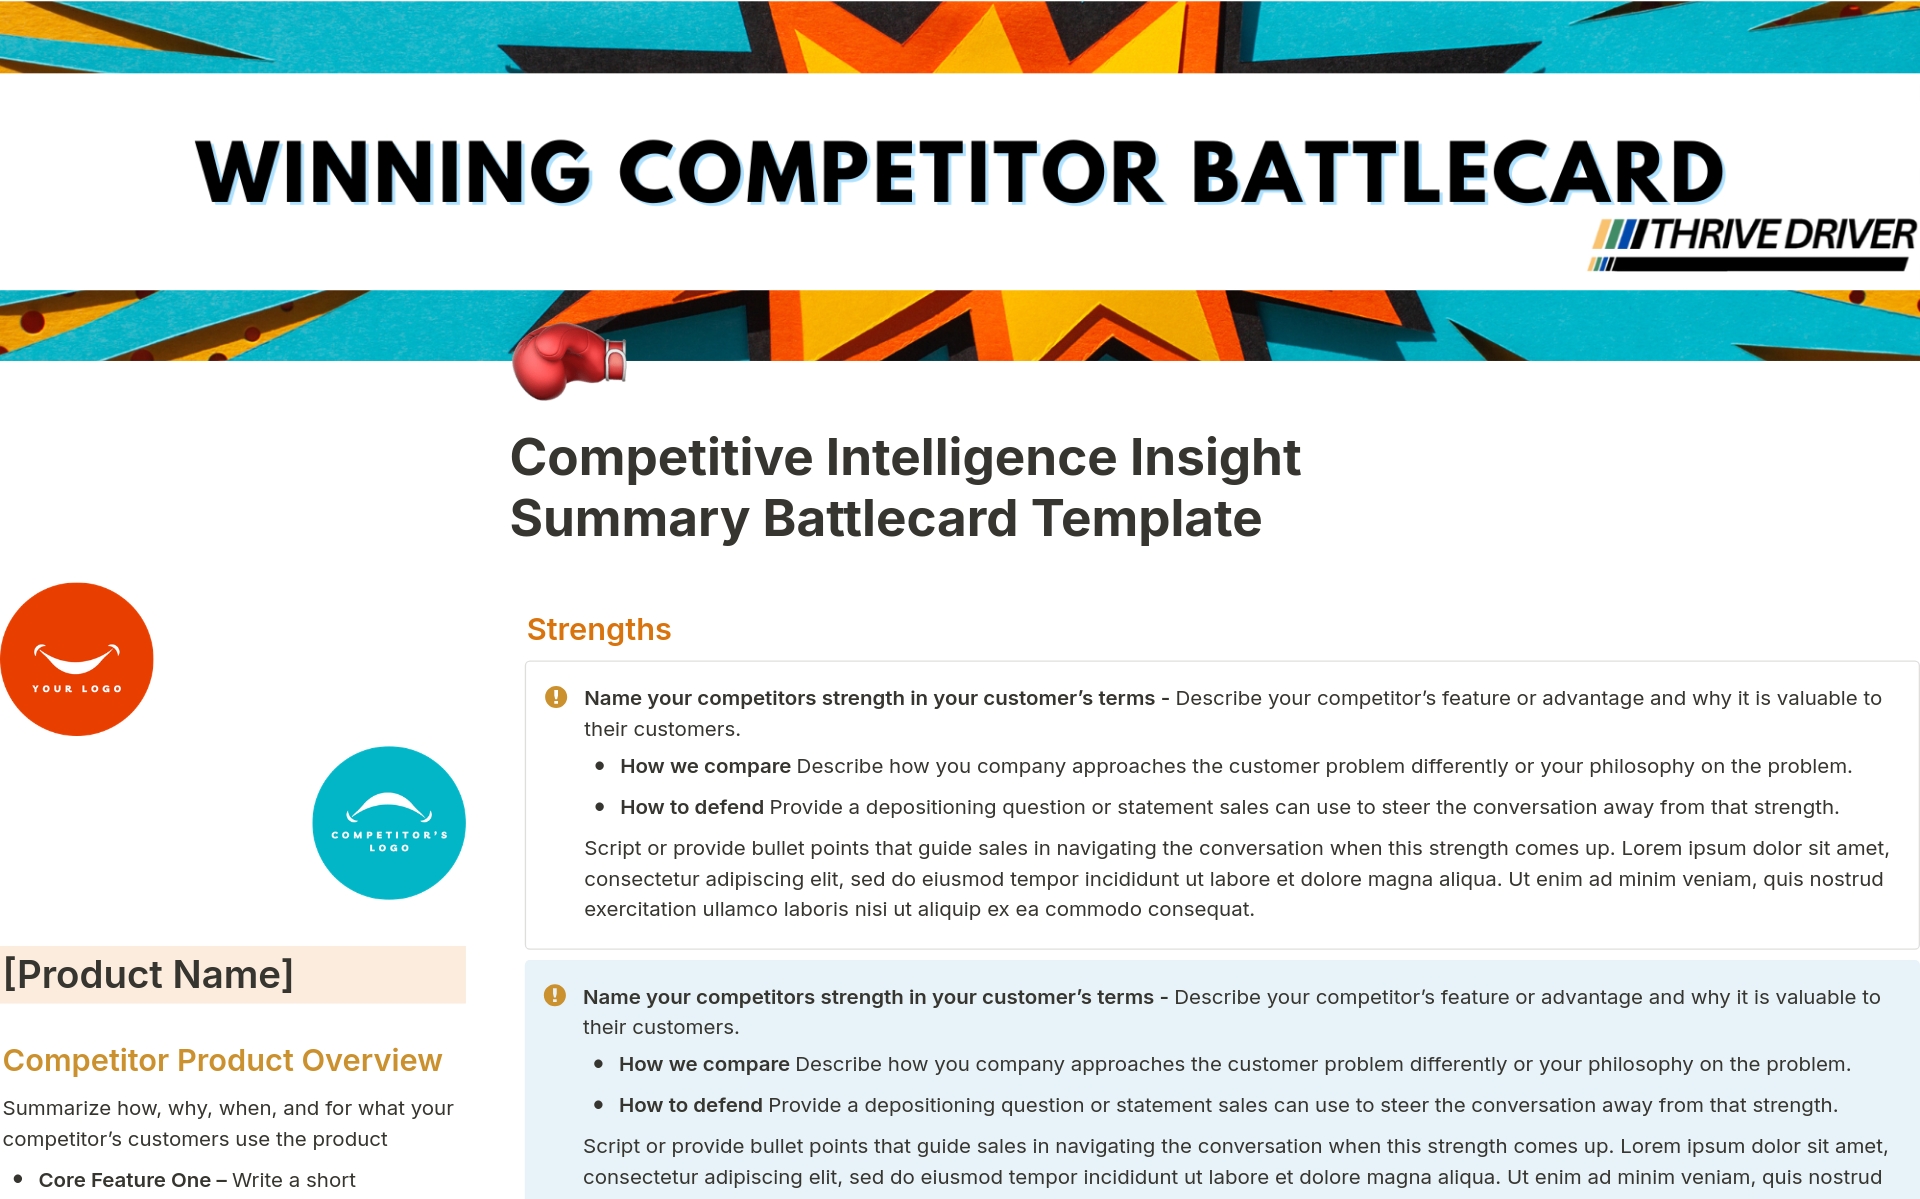 Vista previa de plantilla para Competitive Intelligence Insight Summary